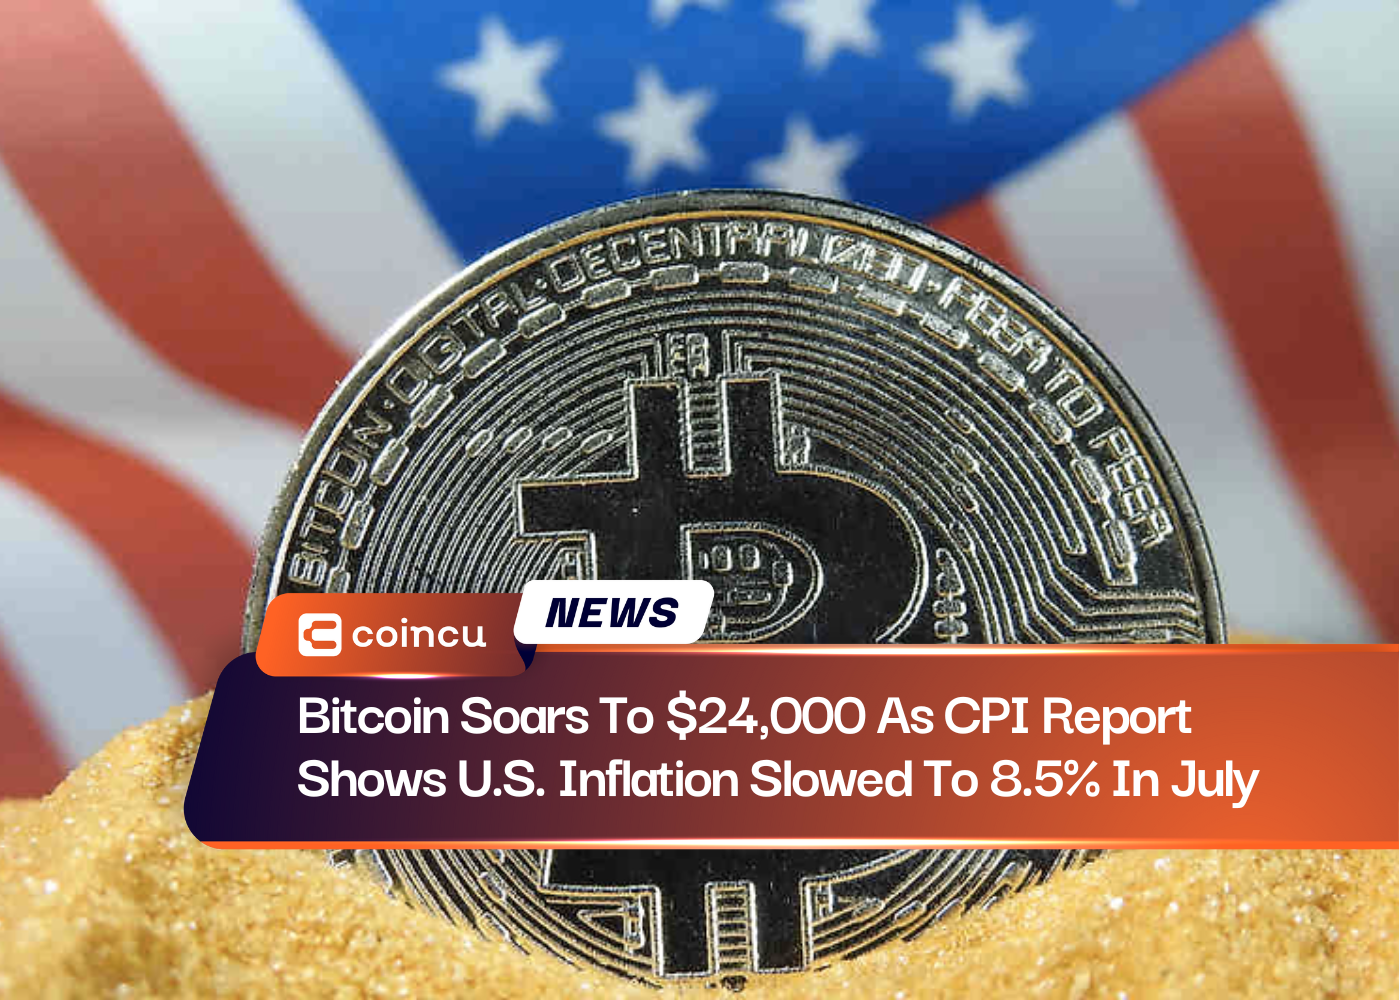 CPI 报告显示 24,000 月份美国通胀放缓至 8.5%，比特币飙升至 XNUMX 美元